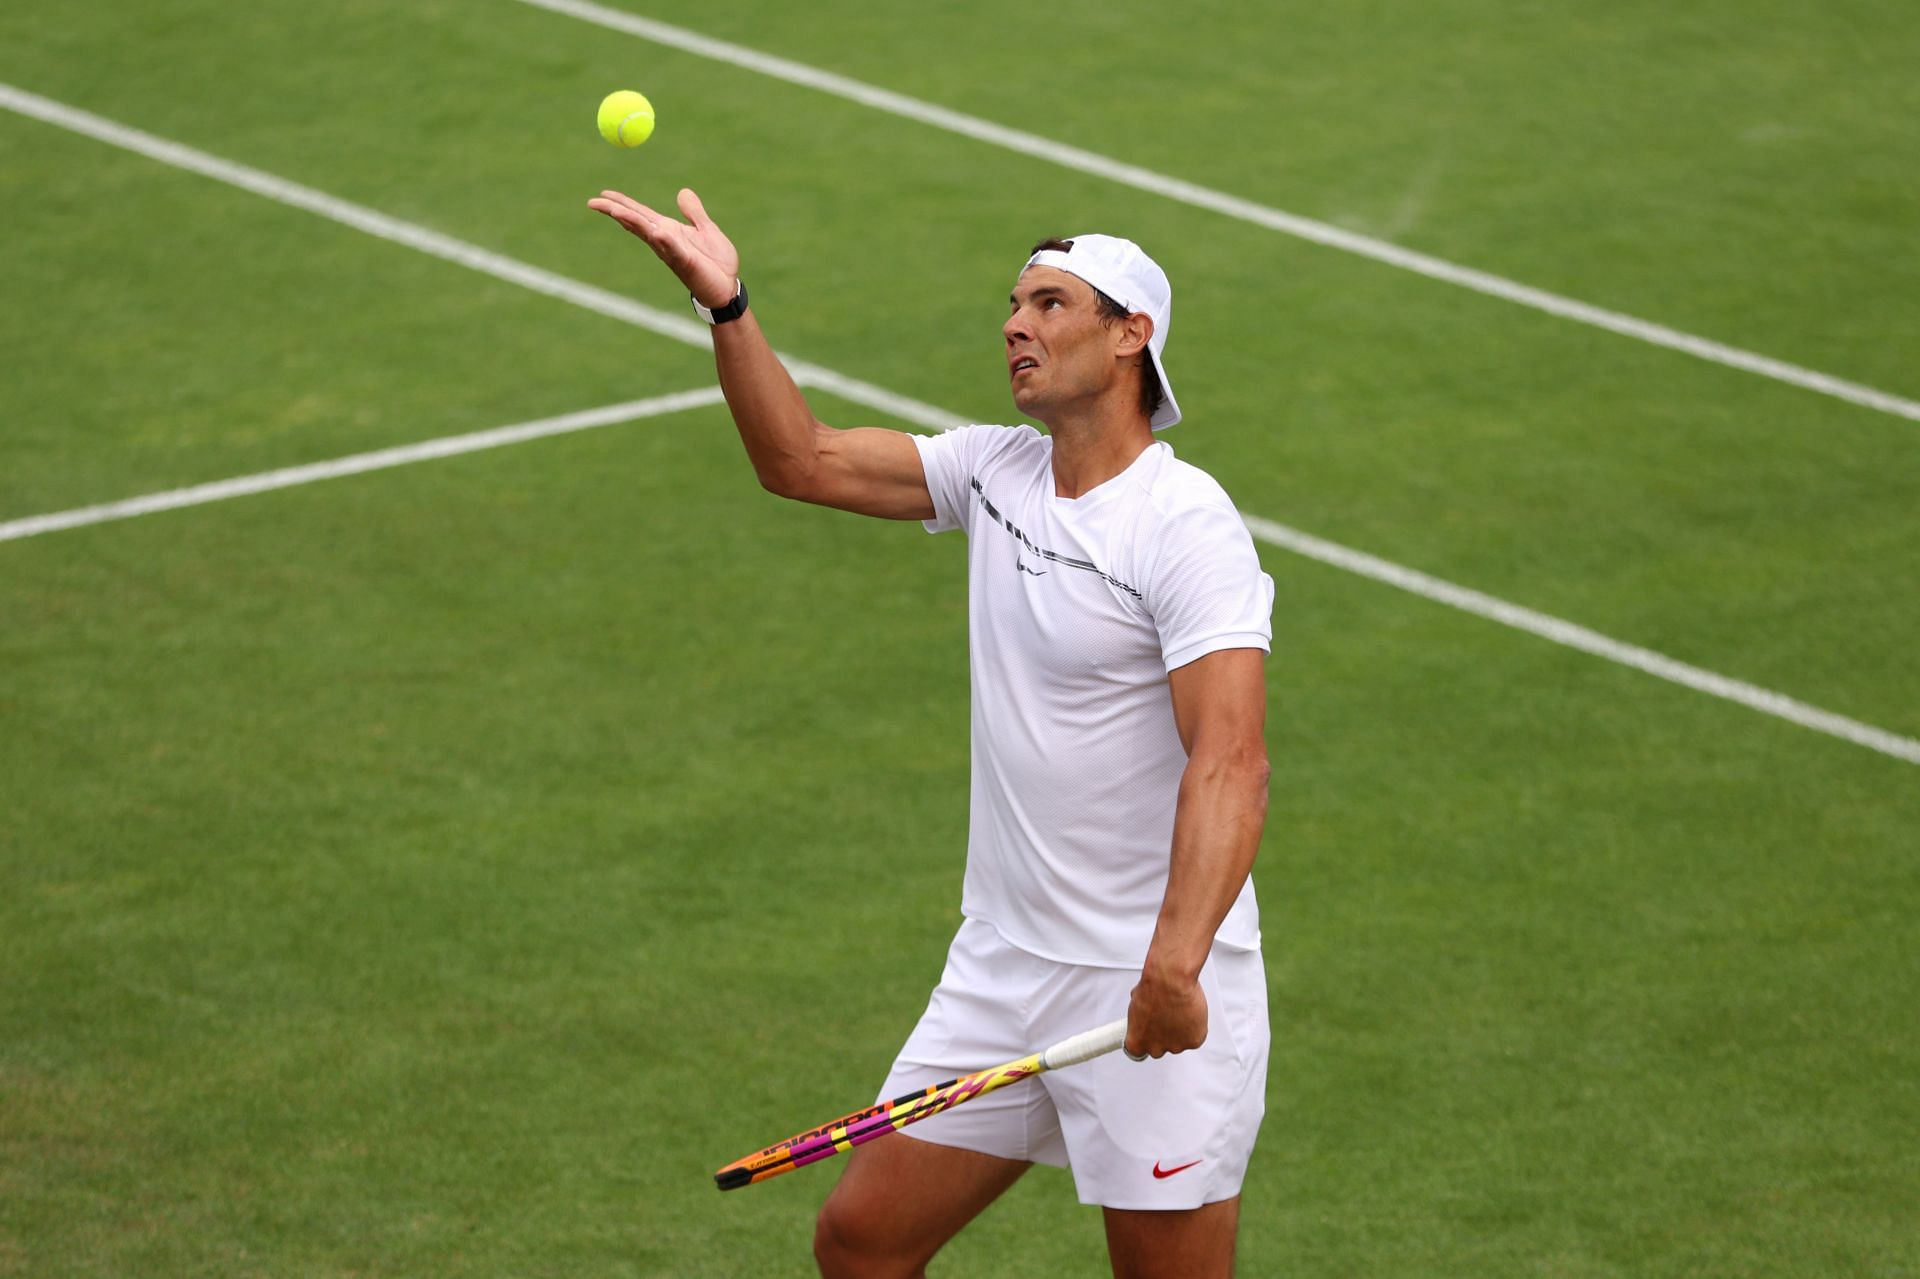 Rafael Nadal has won Wimbledin in 2008 and 2010